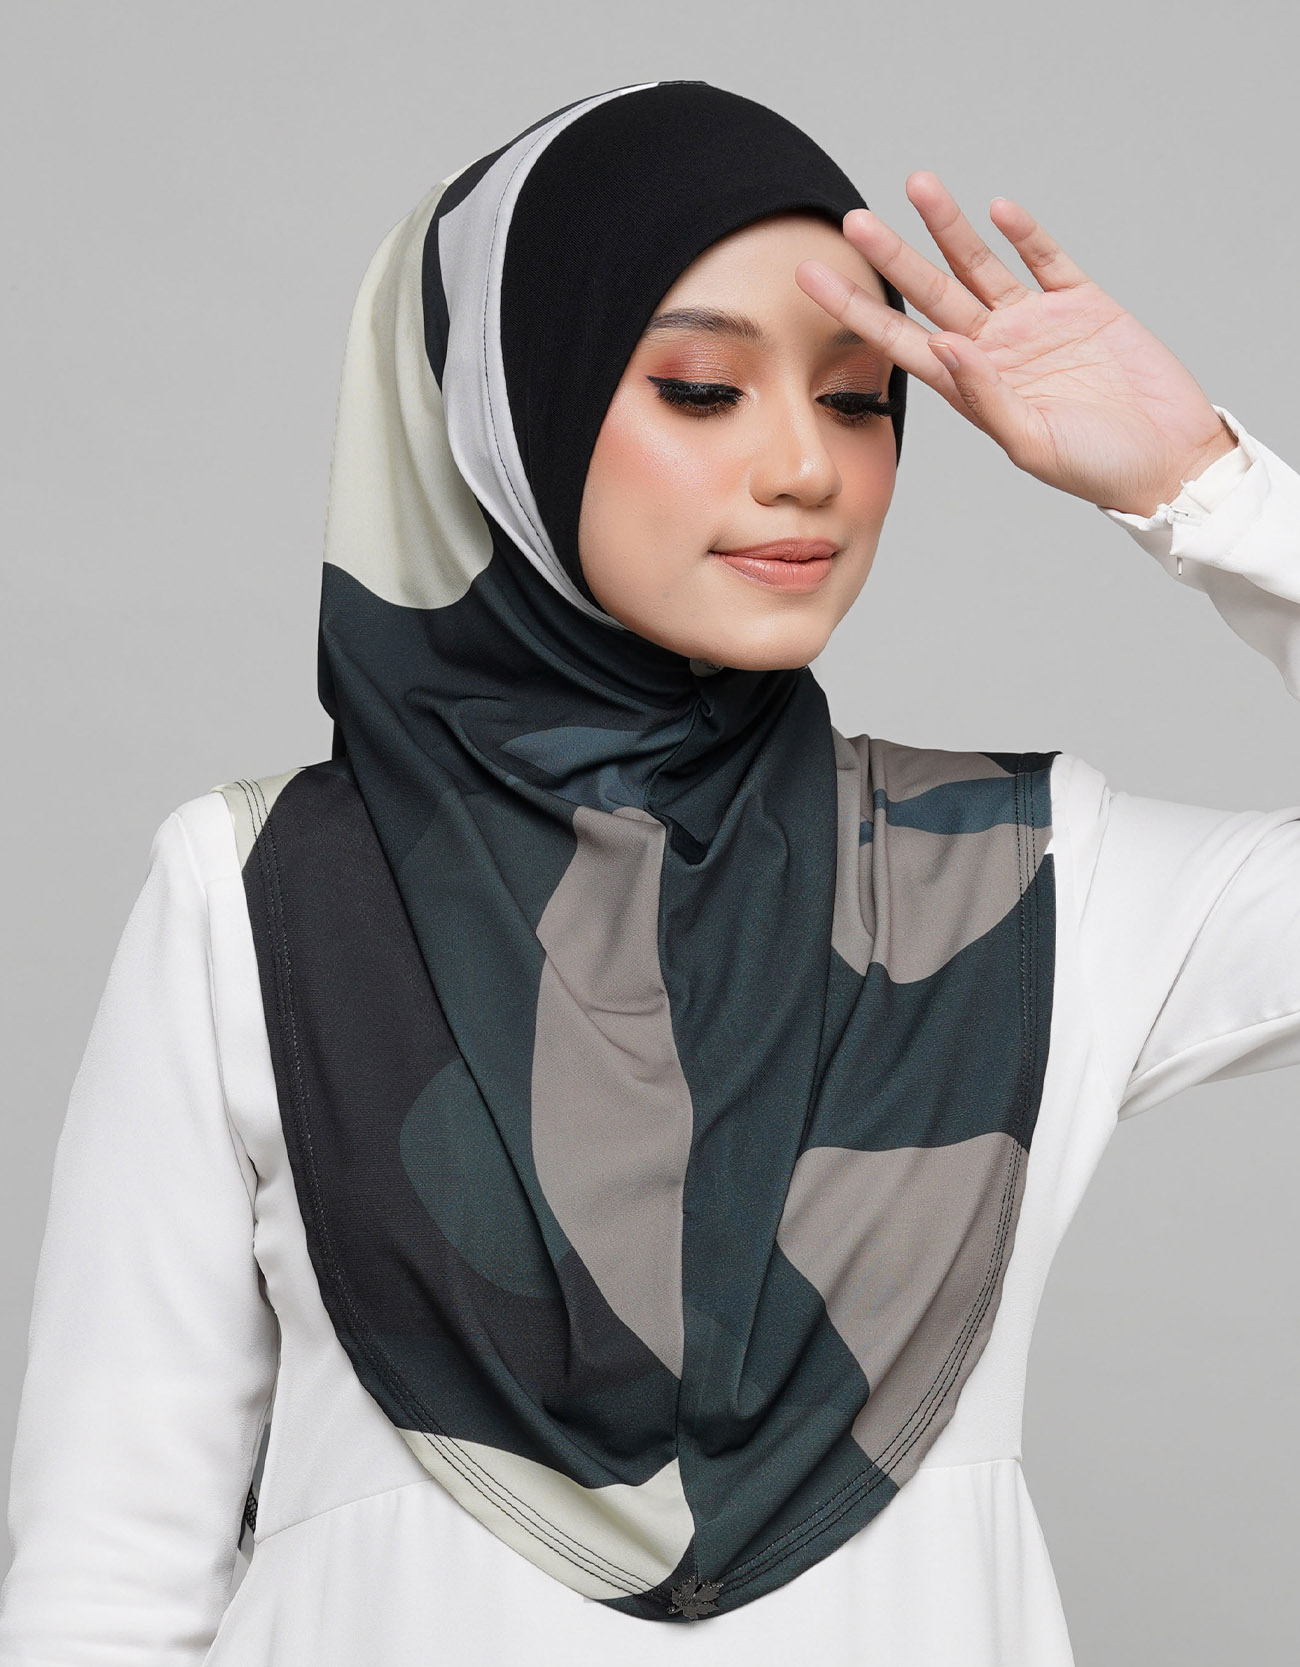 Express Hijab Damia Signature 09 - Black Edition&w=300&zc=1